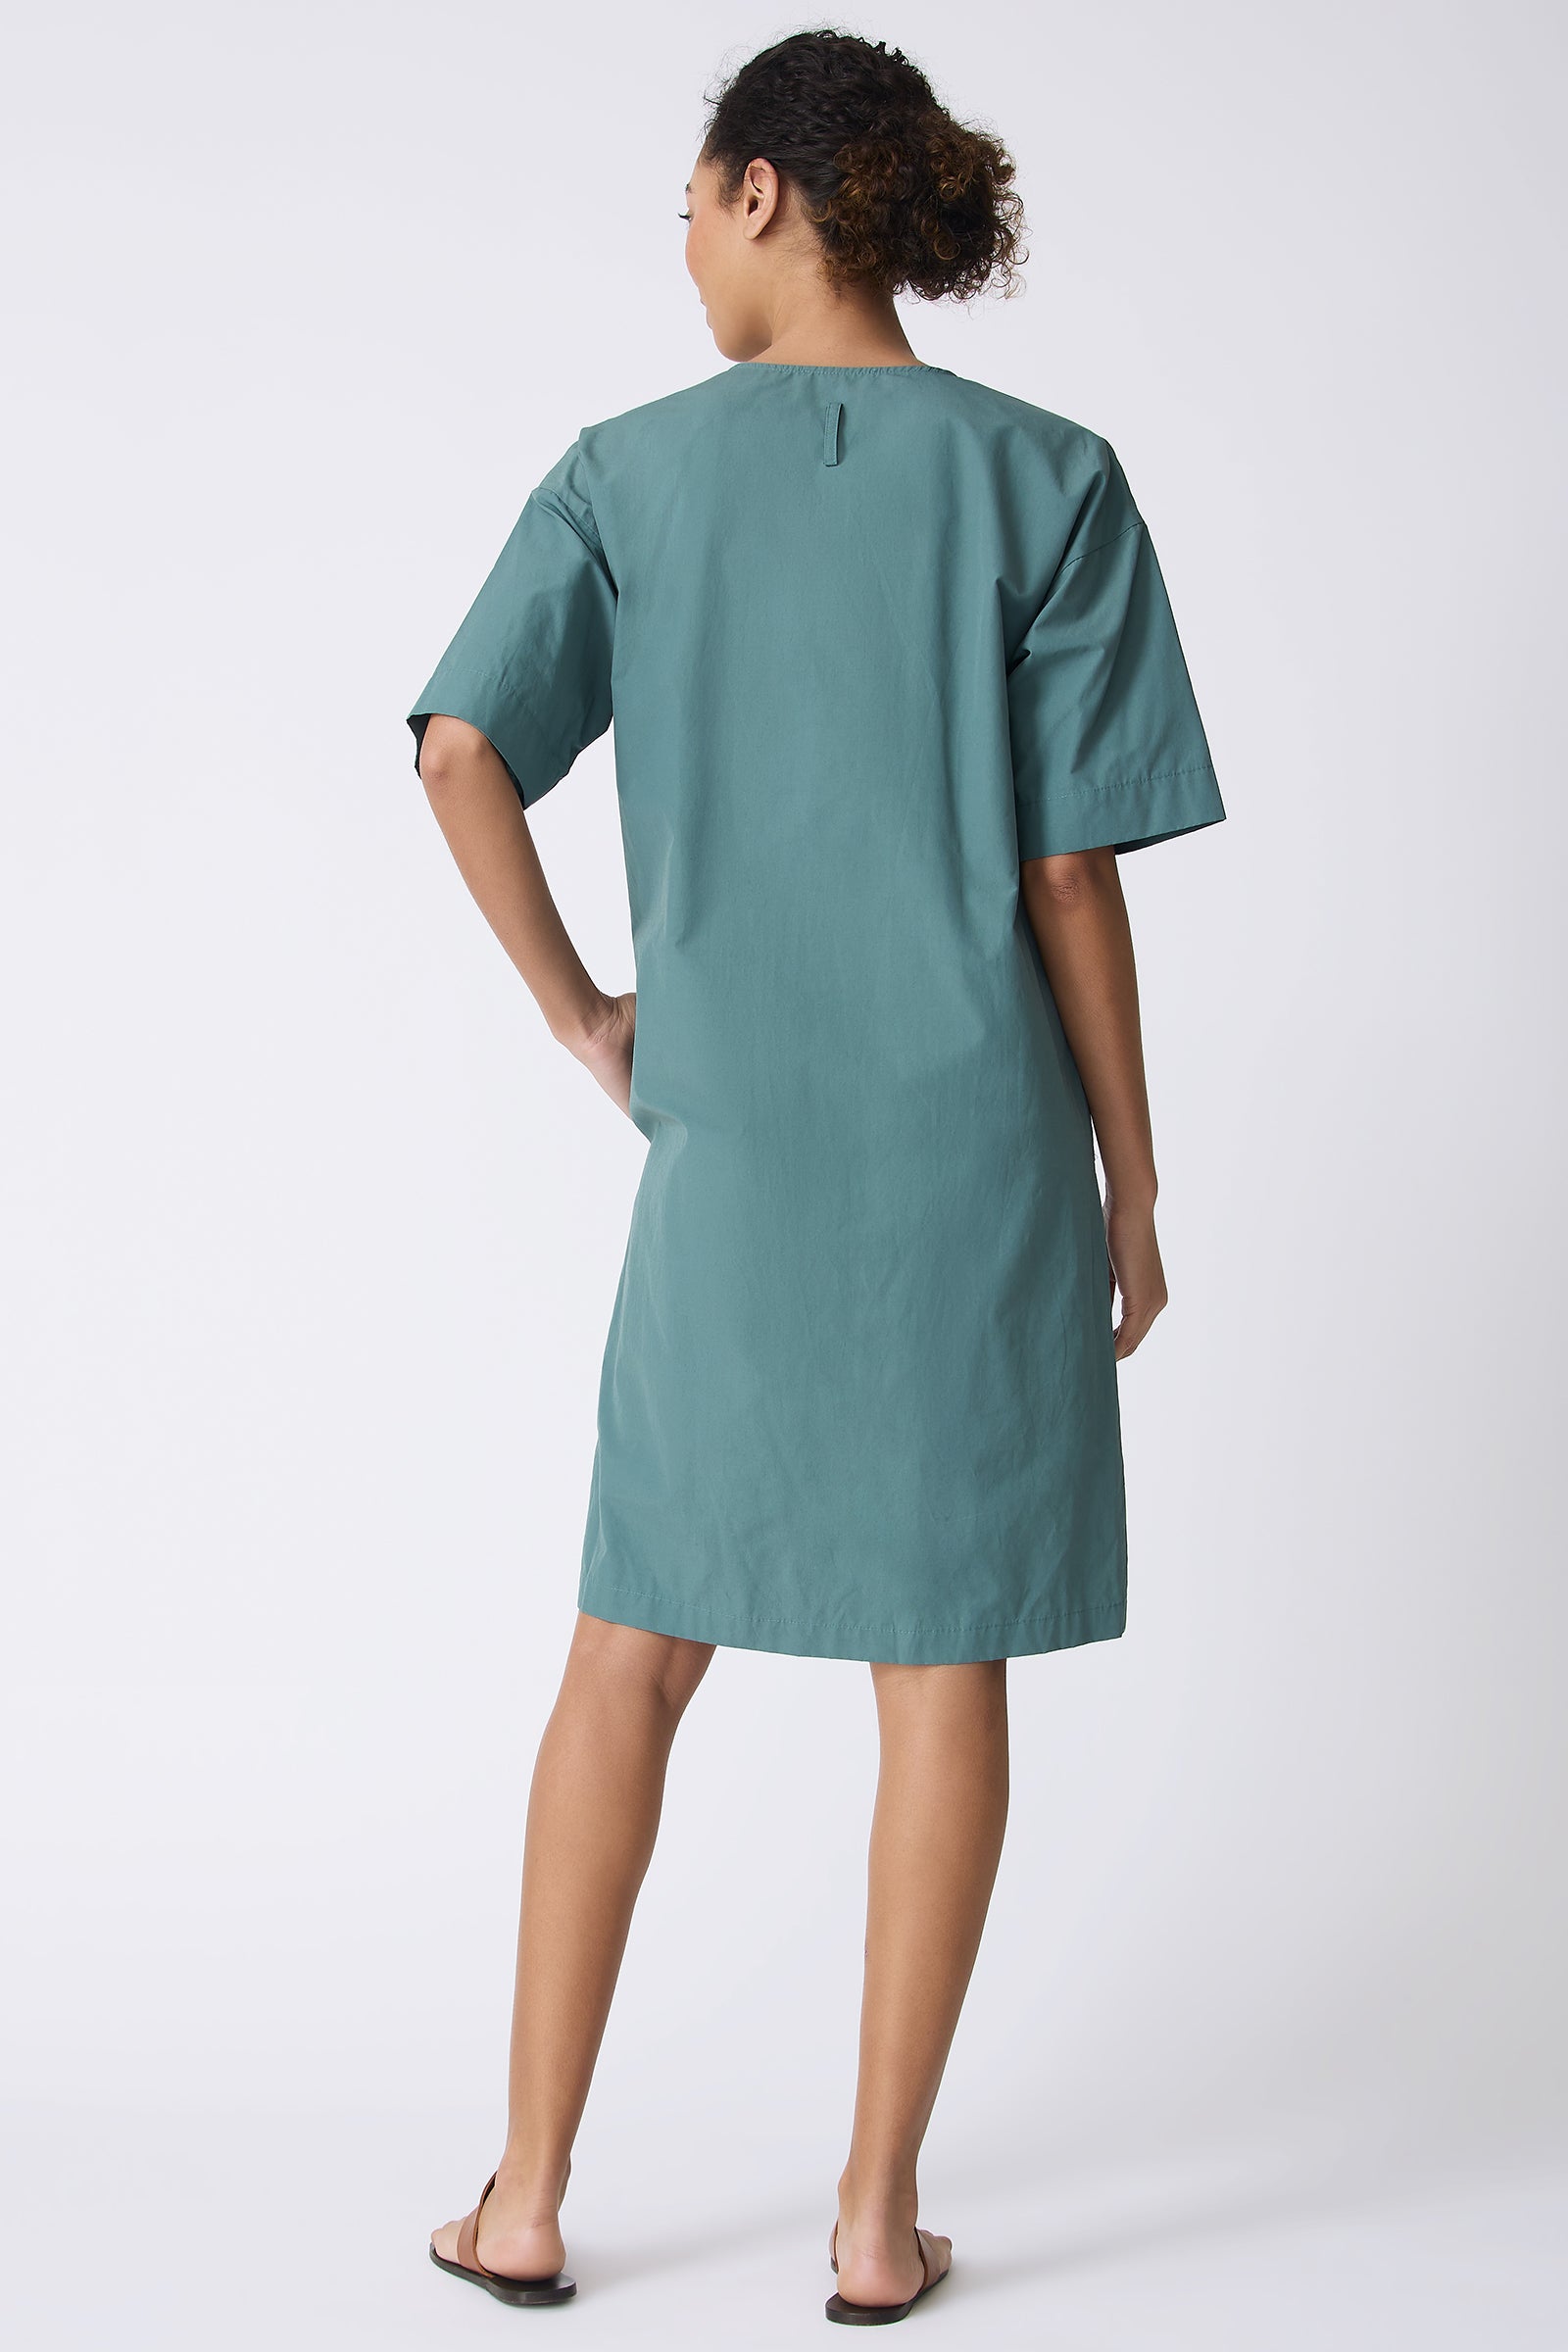 Kal Rieman Cara Fold Front Dress in Sage on model full back view